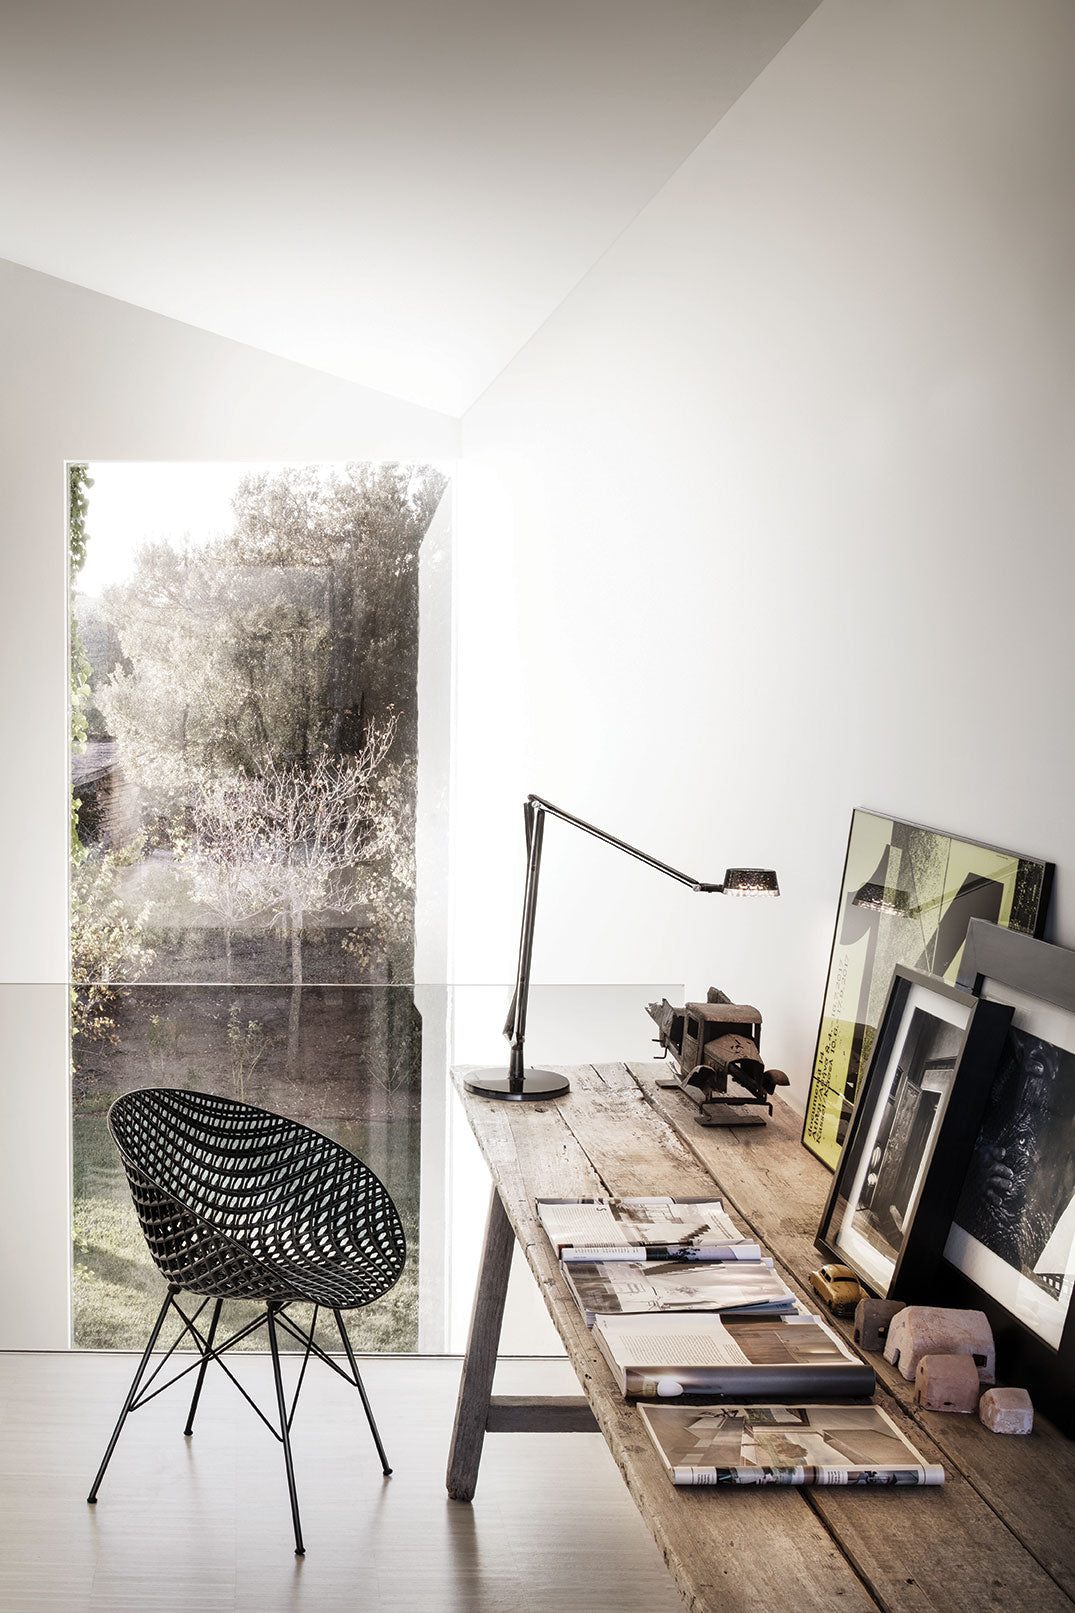 Kartell Smatrik Chair, Transparent/Chrome